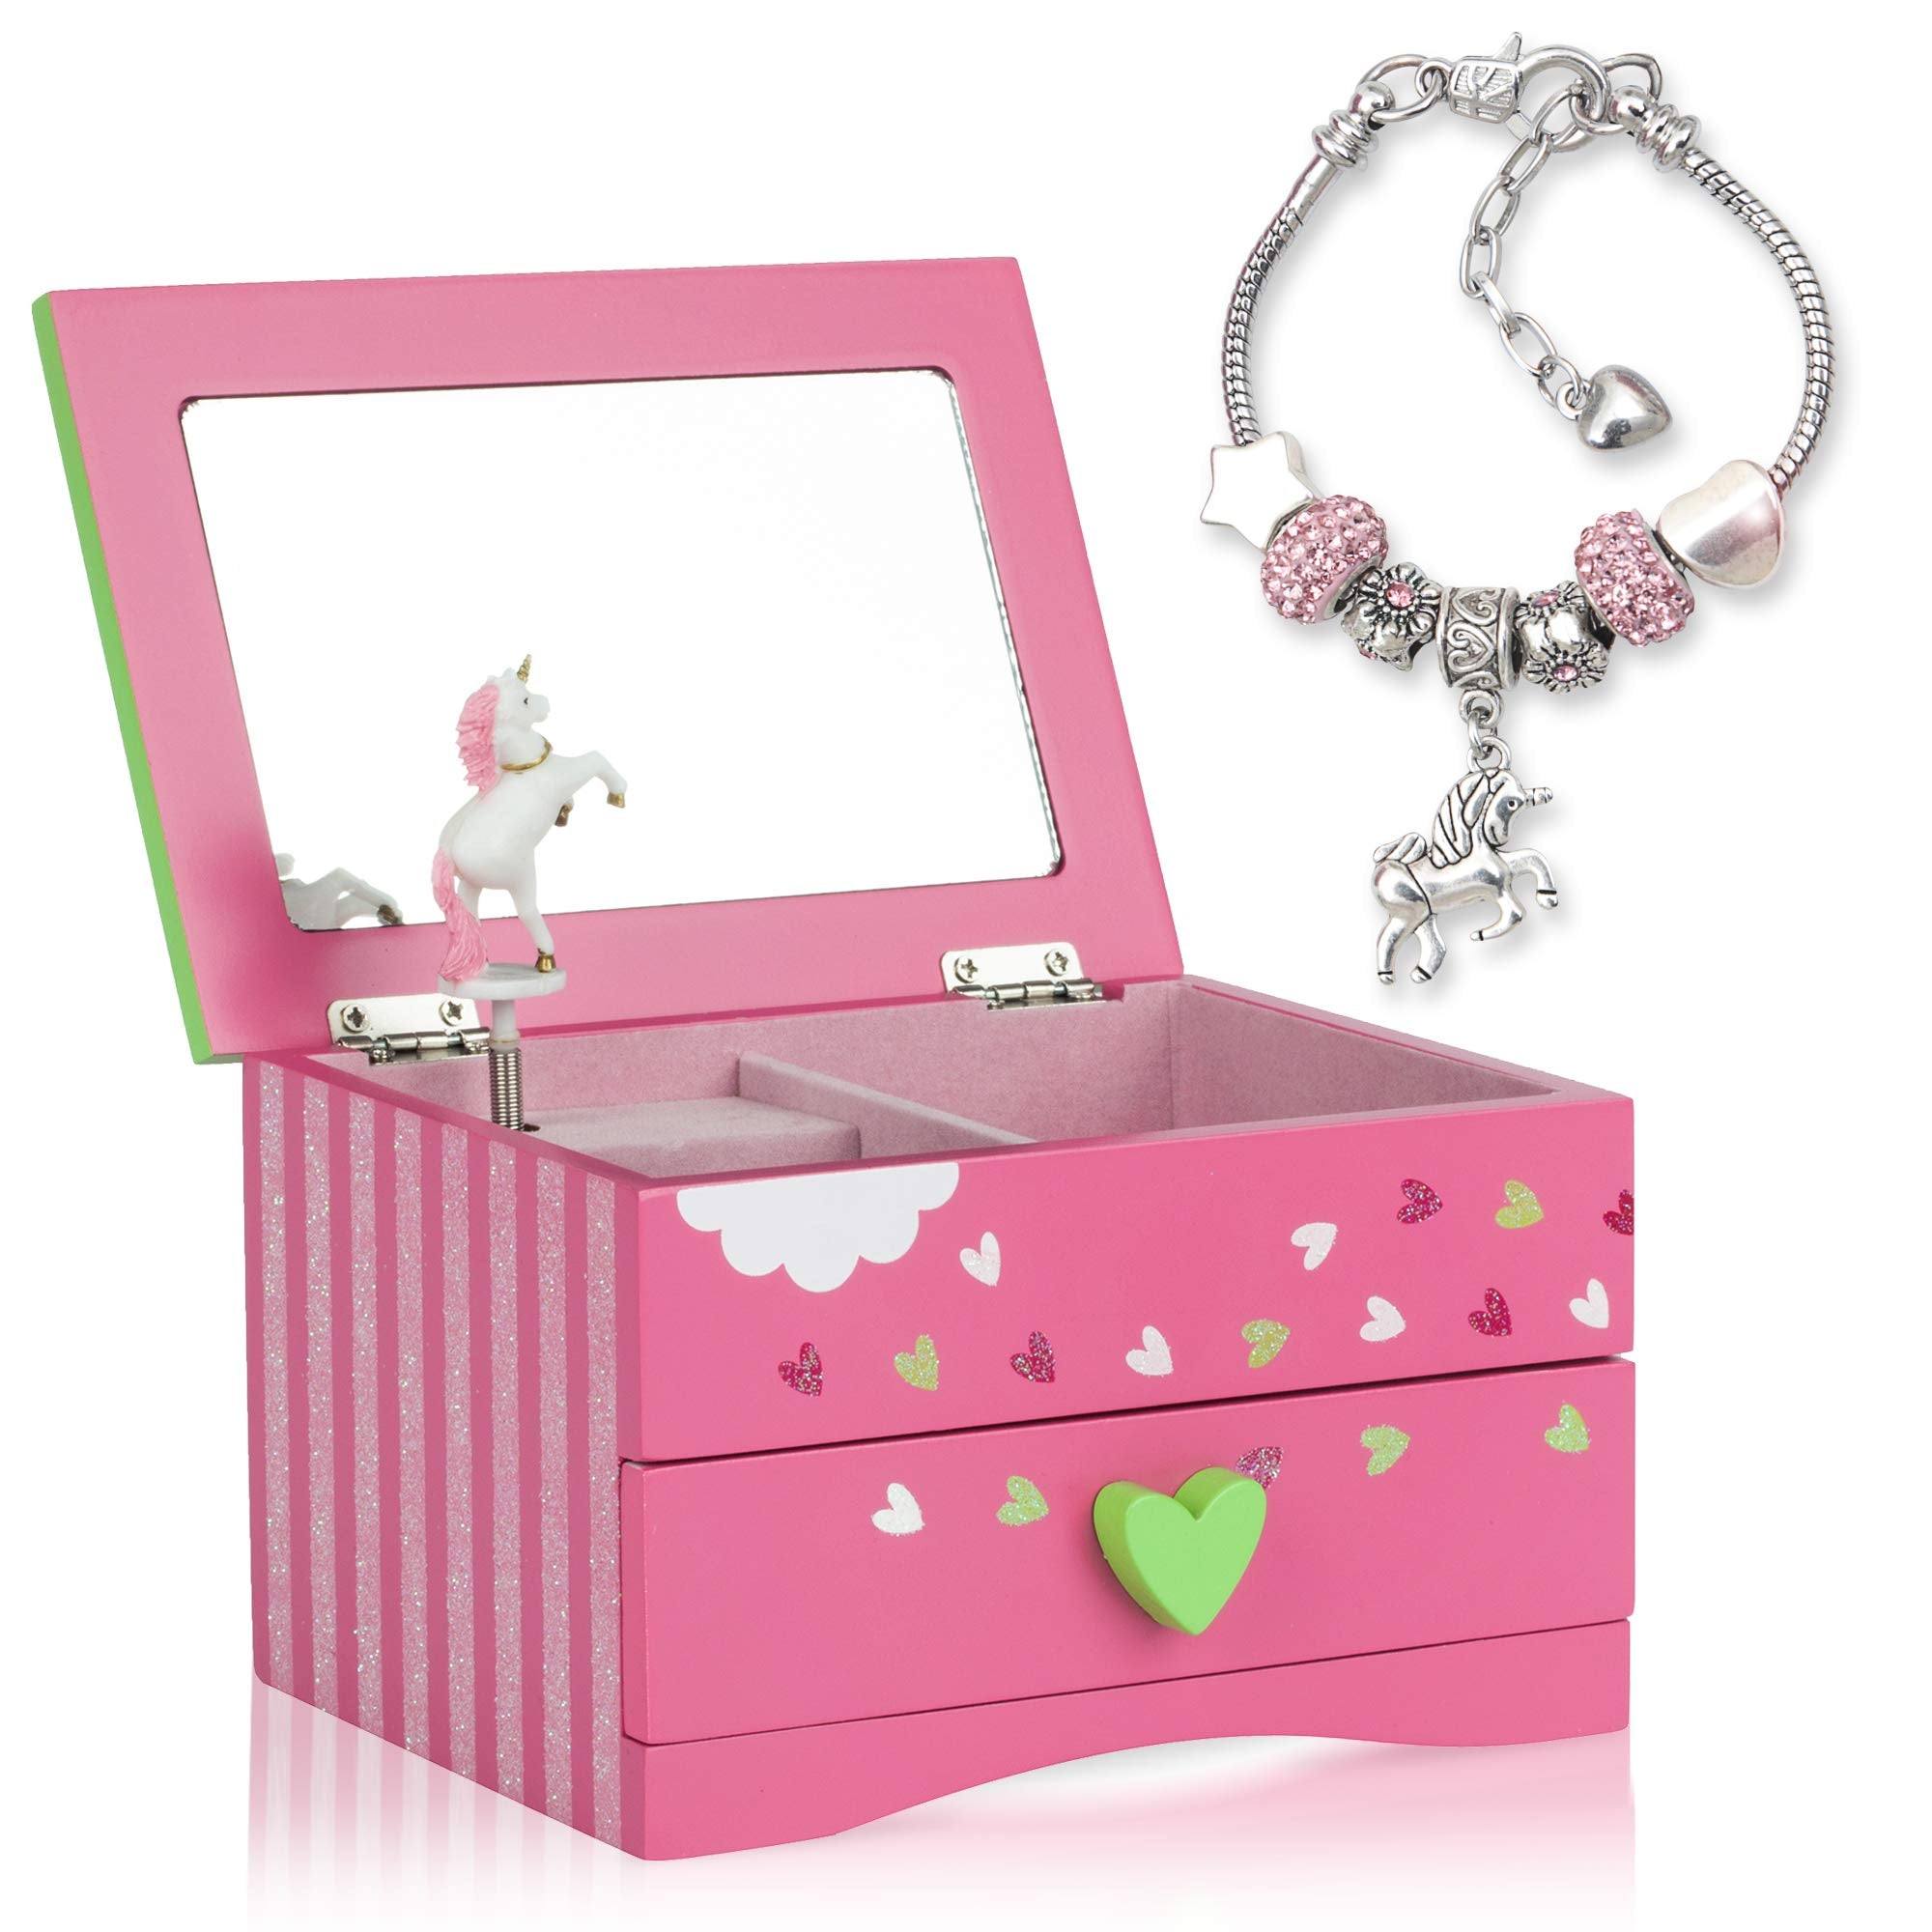 Amitié Lane Unicorn Jewelry Box For Girls - Two Unicorn Gifts For Girls PLUS Augmented Reality App (STEM Toy) - Unicorn Music Box and Unicorn Charm Bracelet (Pink))